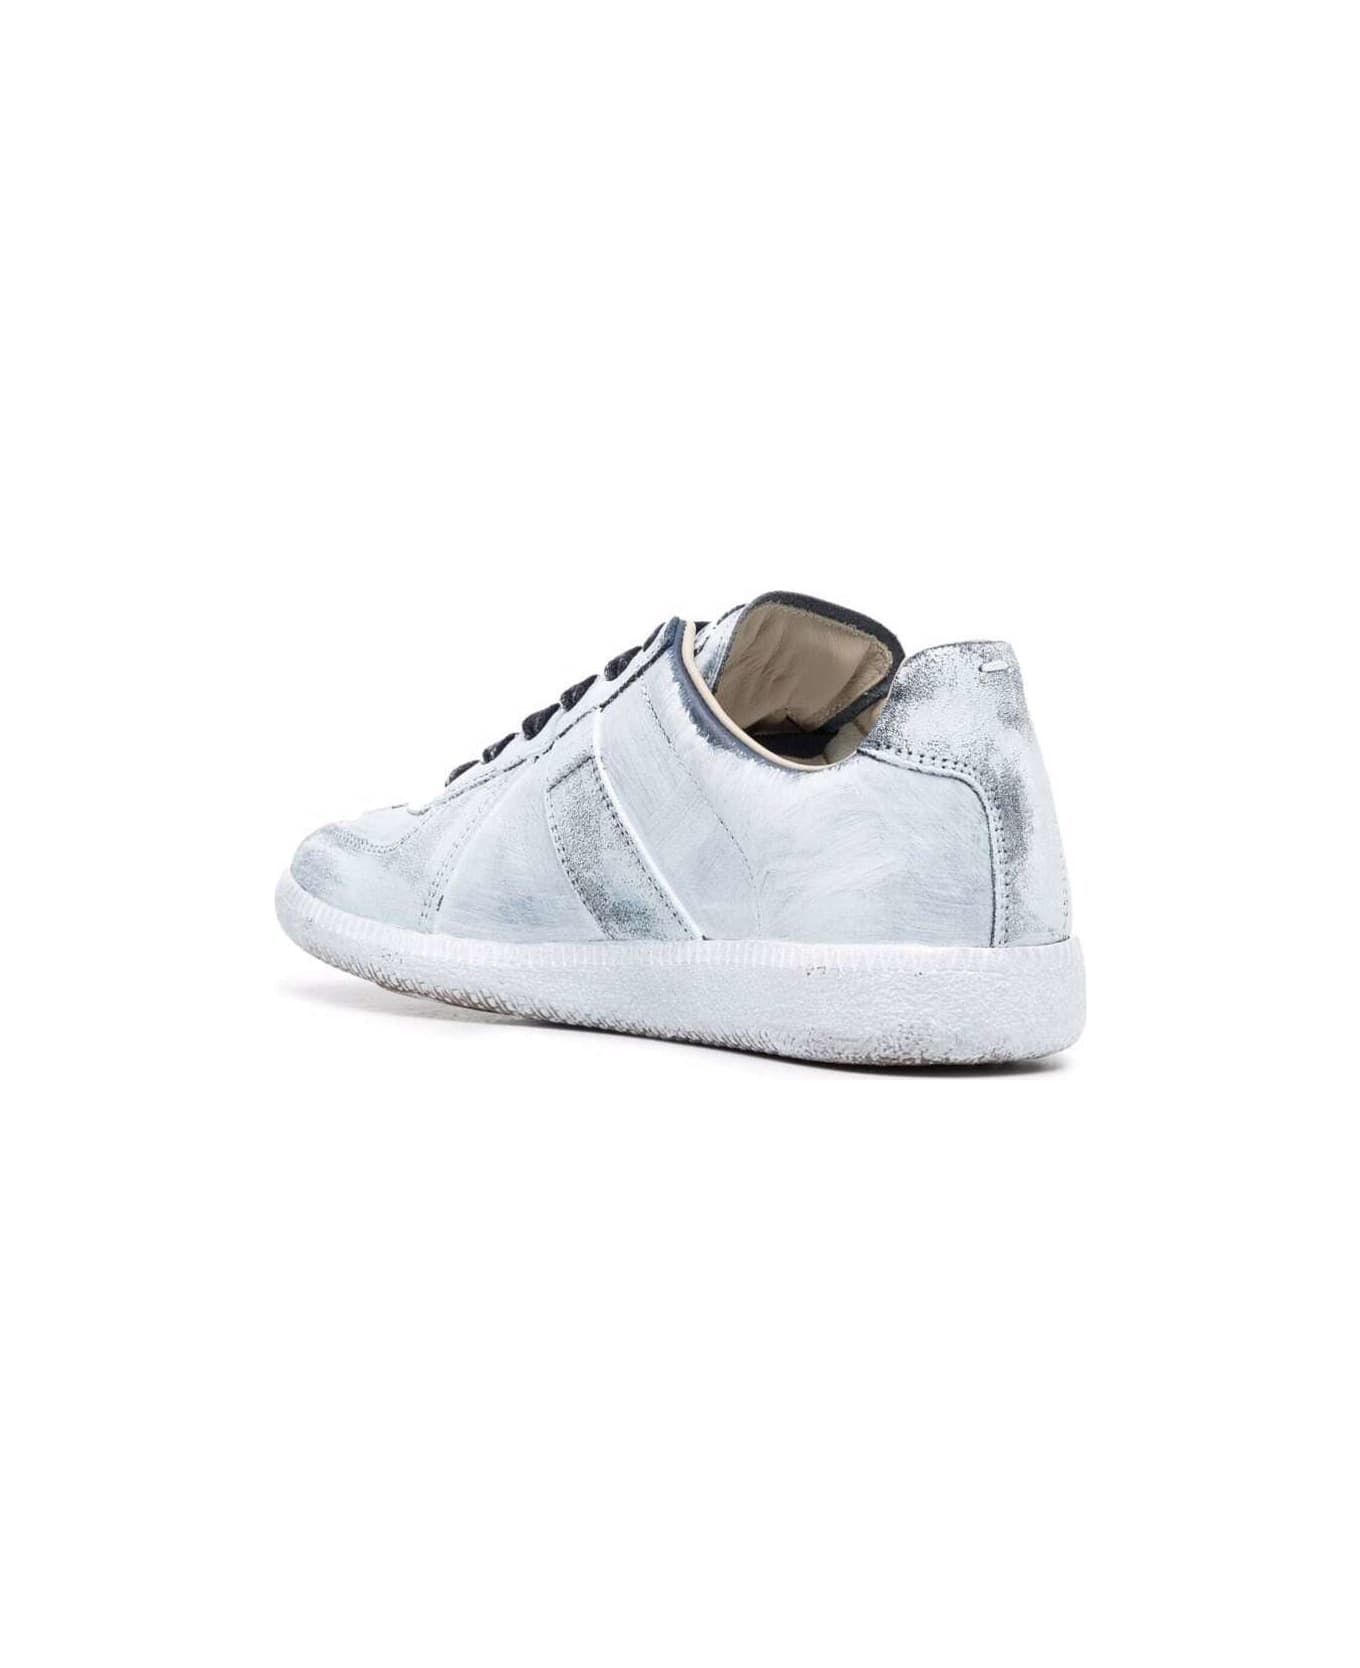 Maison Margiela Woman's Replica Worn Effect Leather Sneakers - White